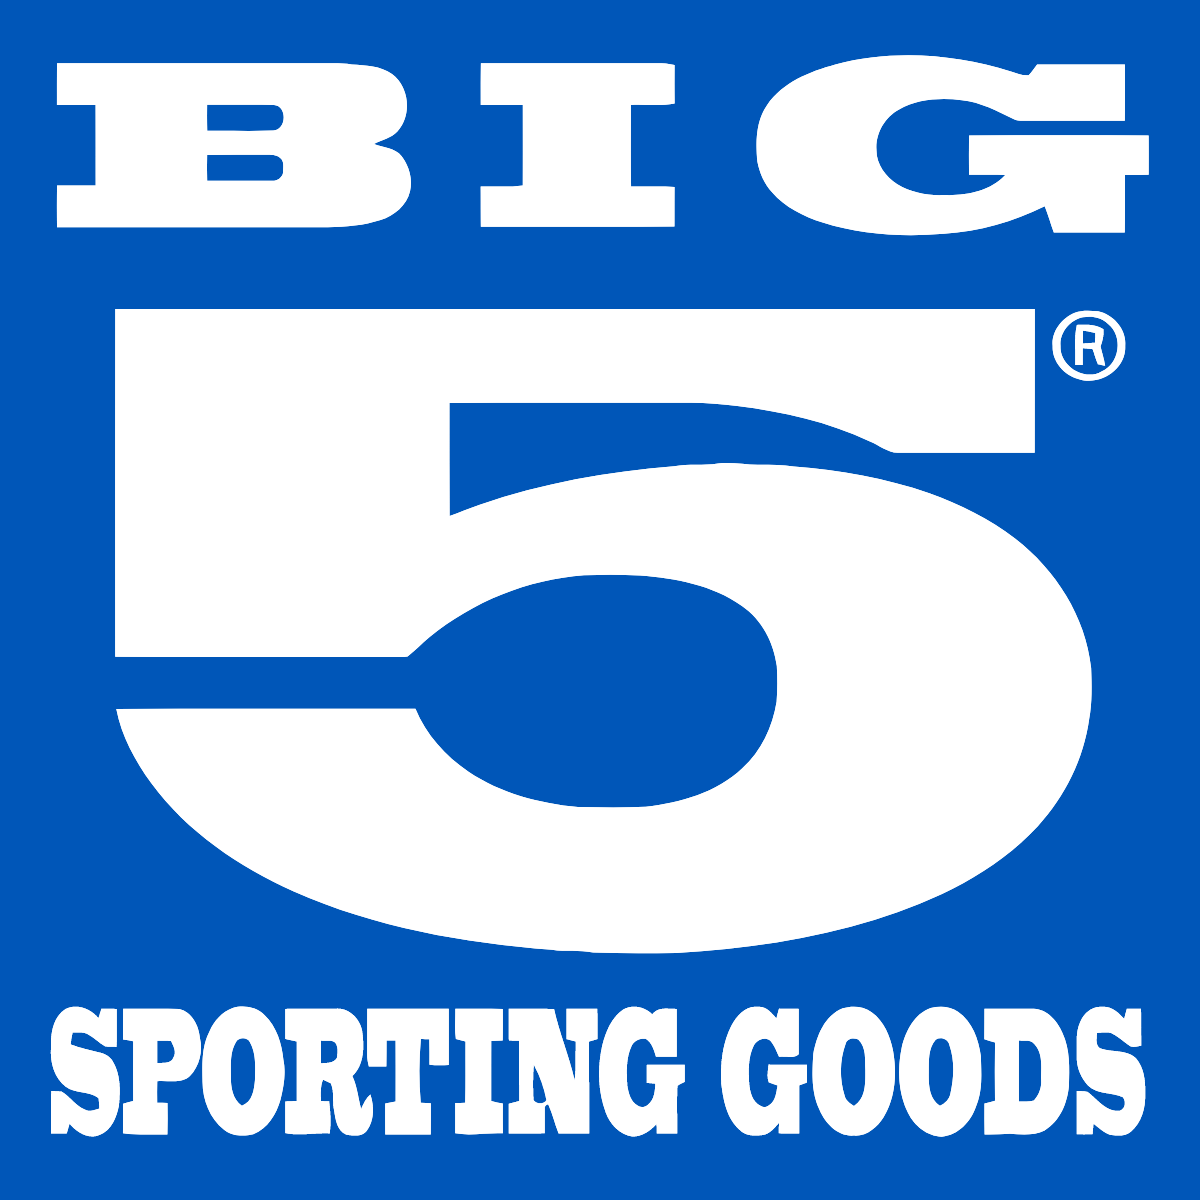 Big 5 Sporting Goods logo (transparent PNG)